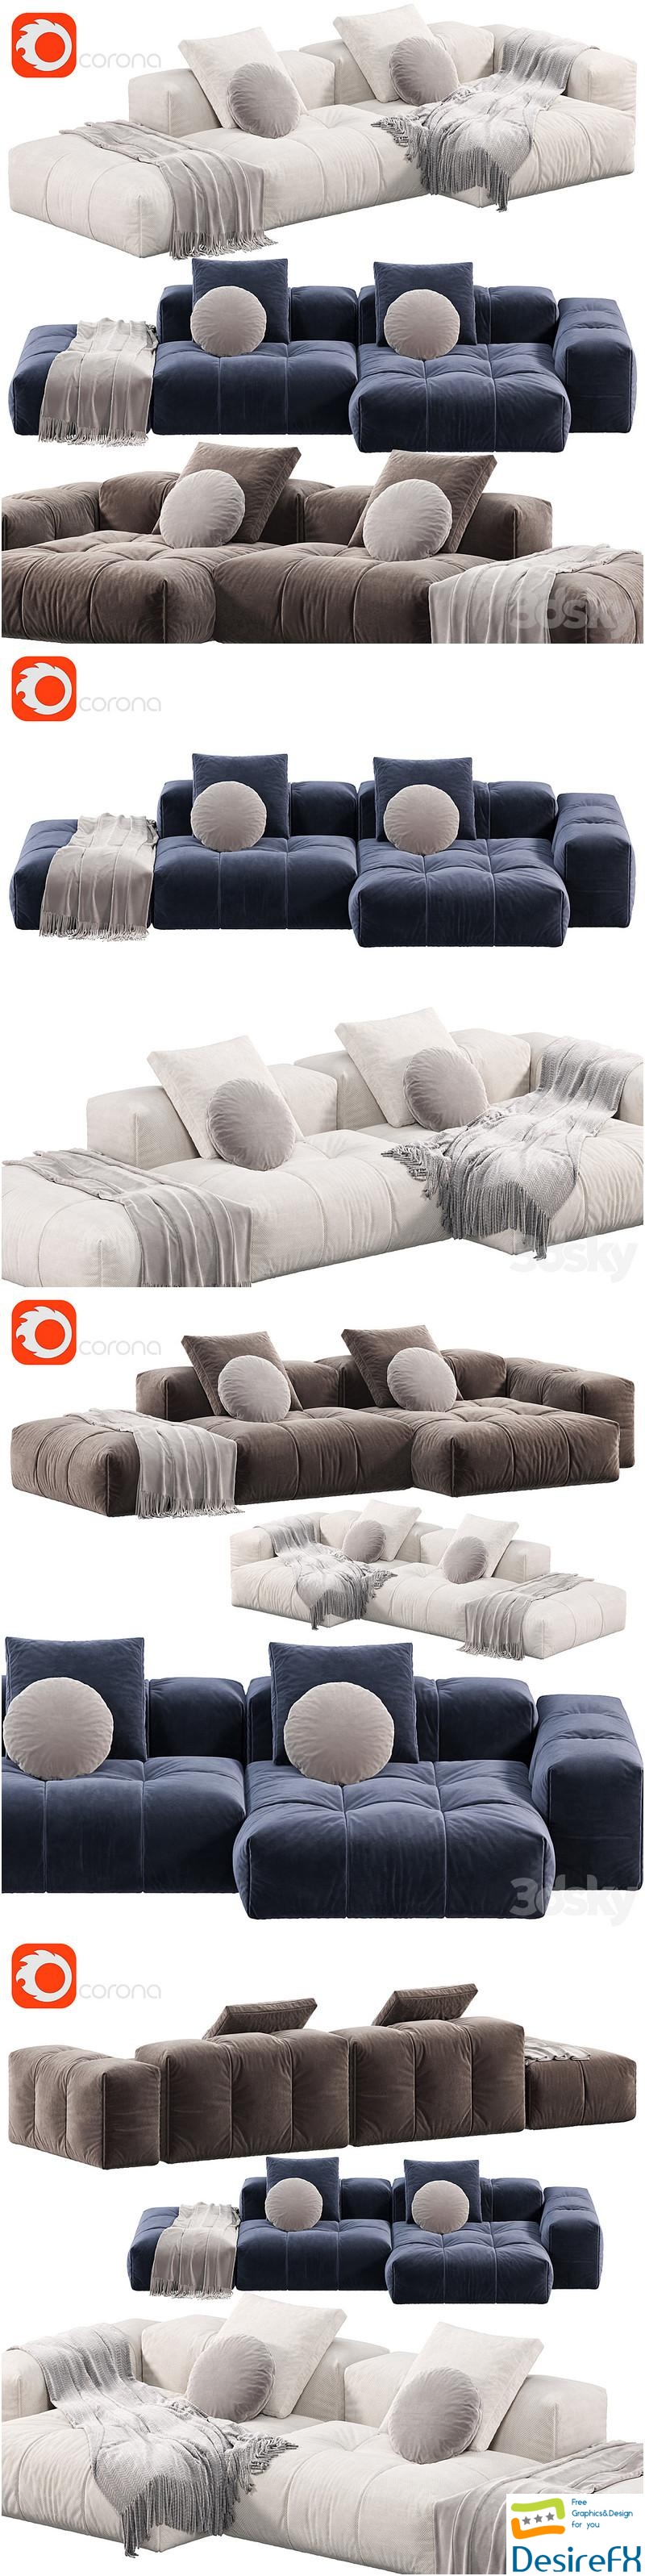 PIXEL Sofa by Saba Italia 4, sofas 3D Model